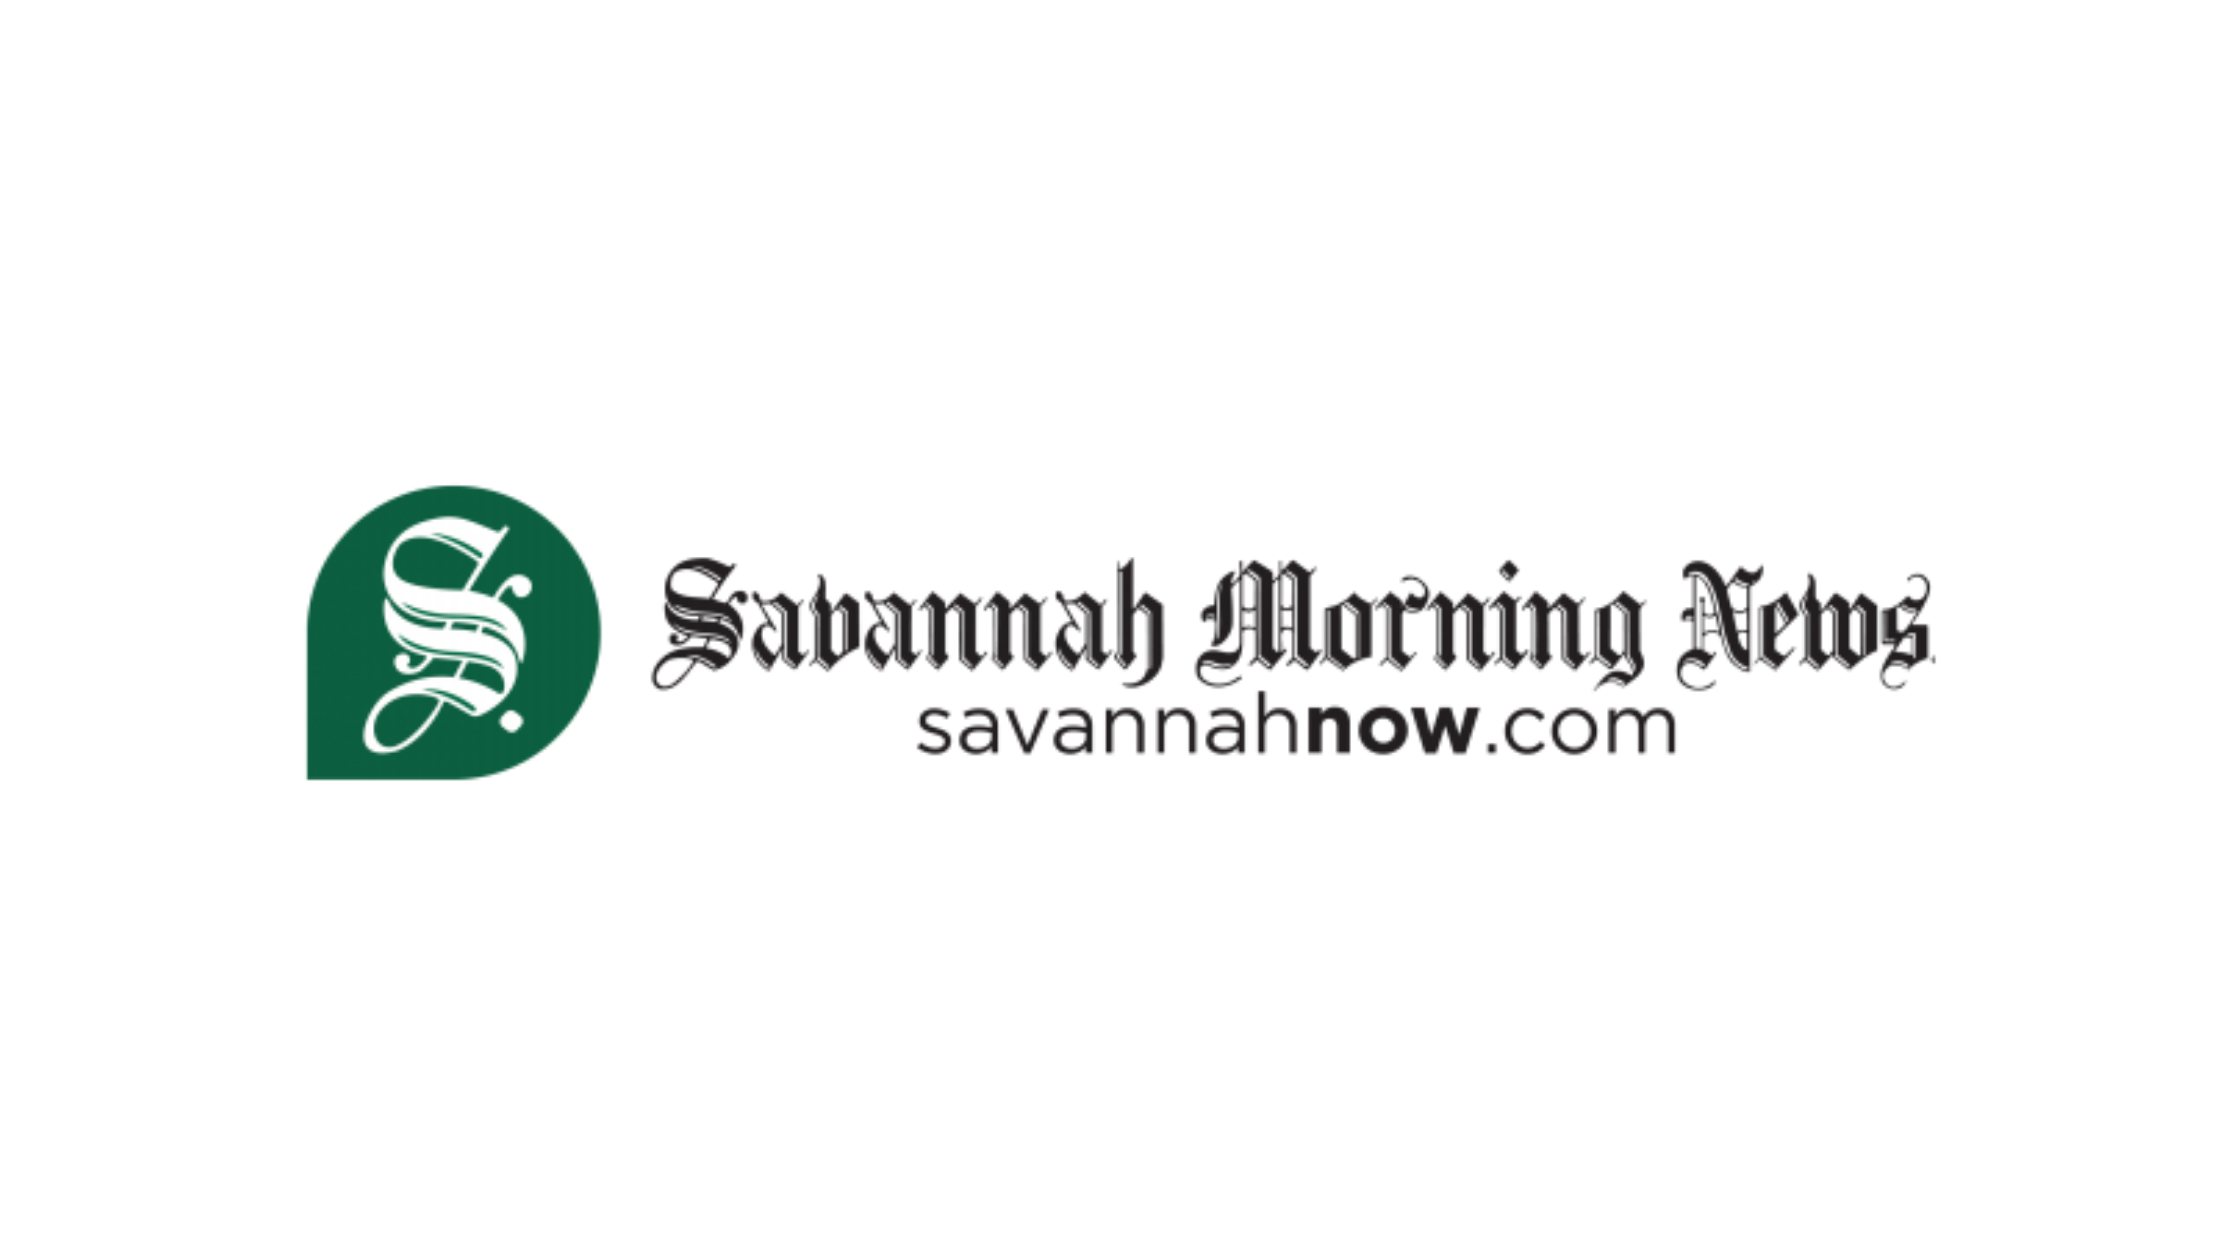 Savannah Morning News